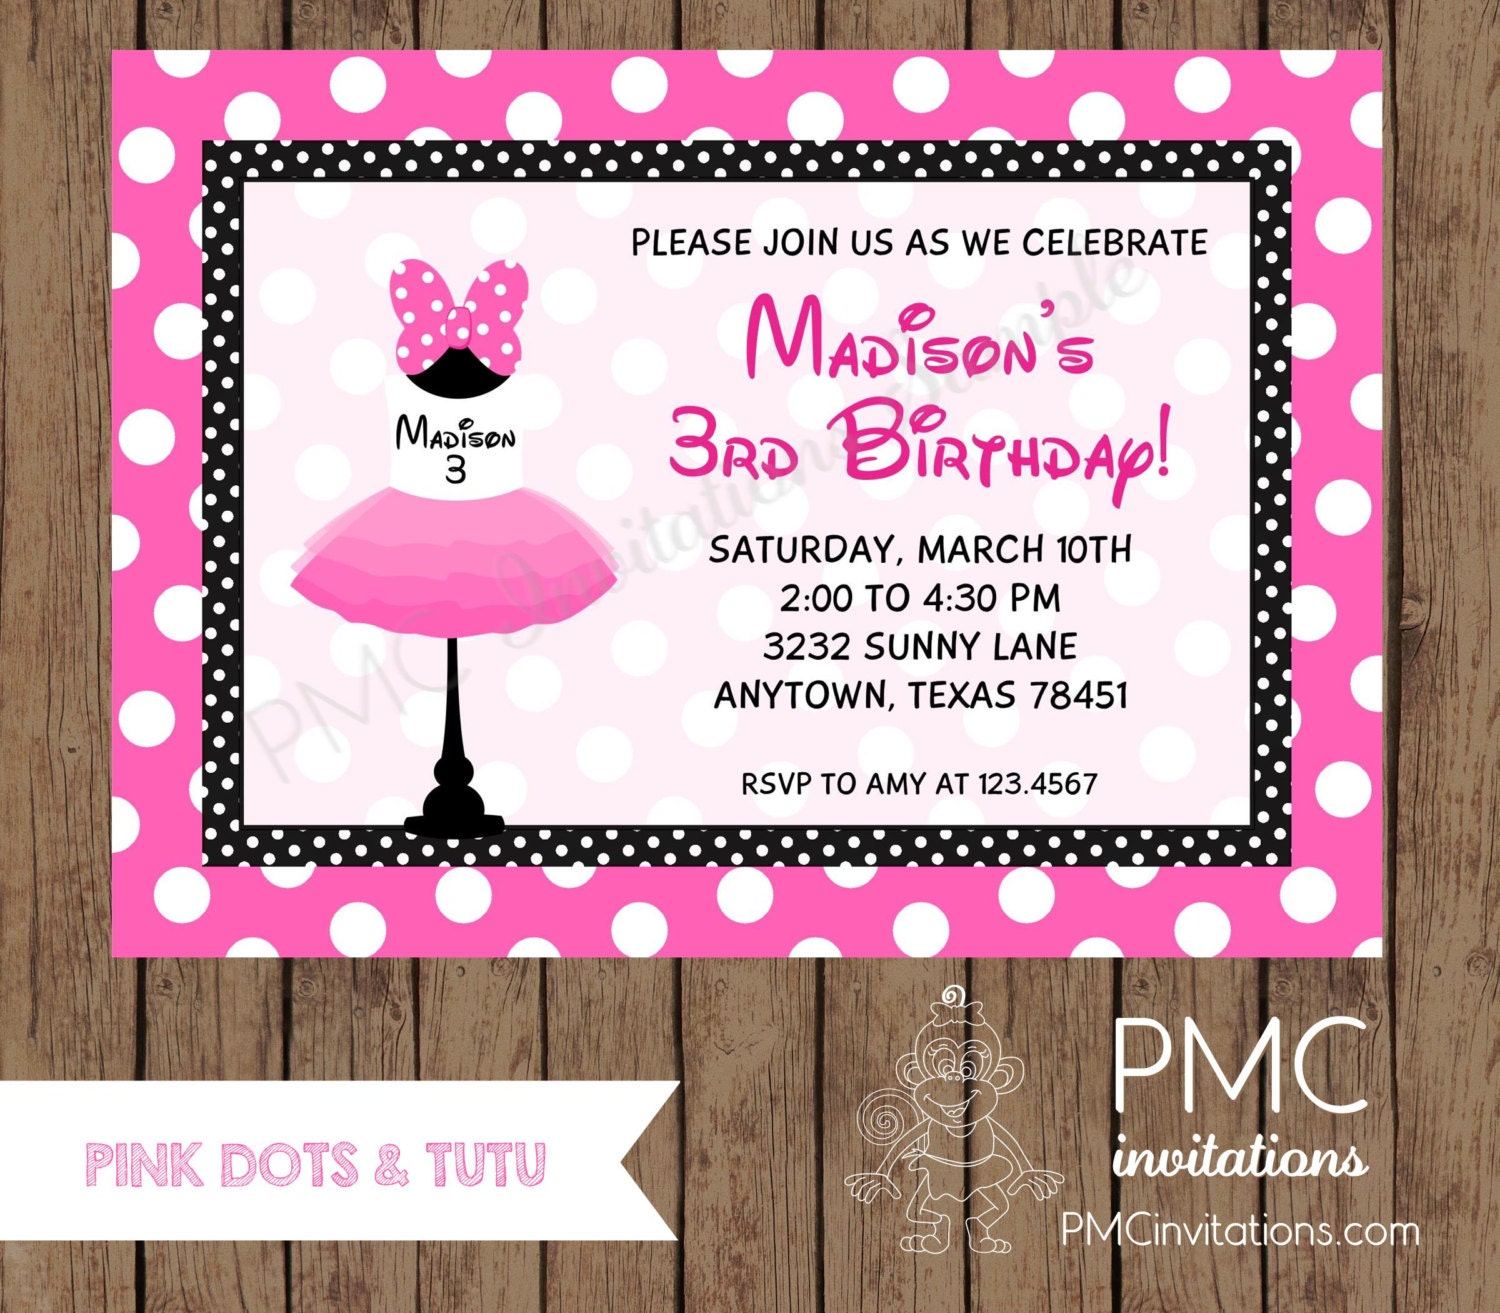 custom-printed-birthday-invitations-1-00-each-by-pmcinvitations